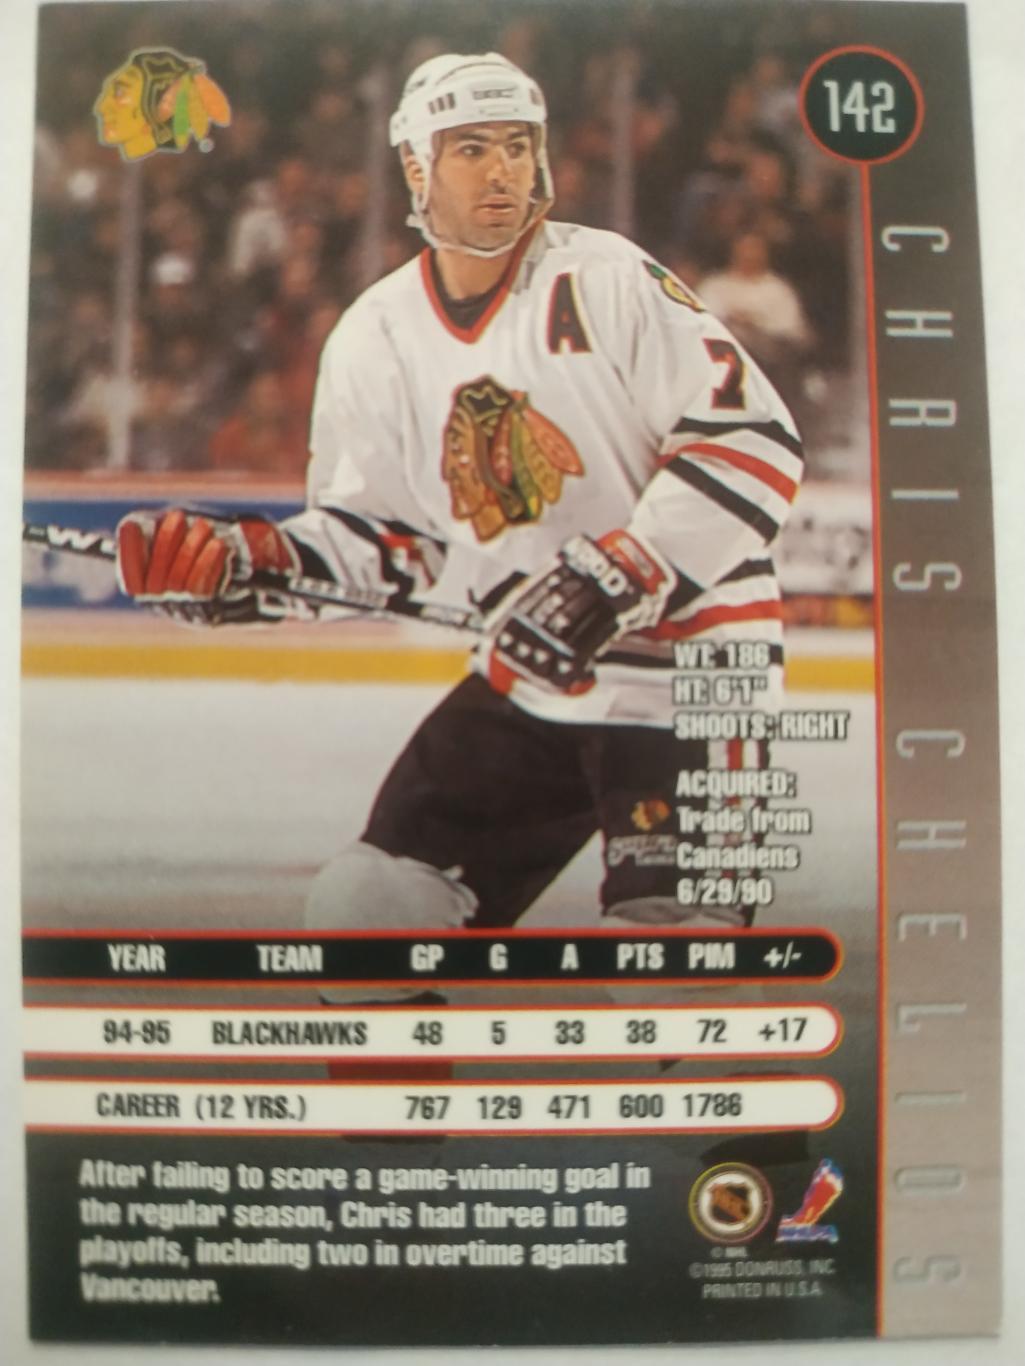 ХОККЕЙ КАРТОЧКА НХЛ DONRUSS LEAF 1995-96 CHRIS CHELIOS CHICAGO BLACKHAWKS #142 1